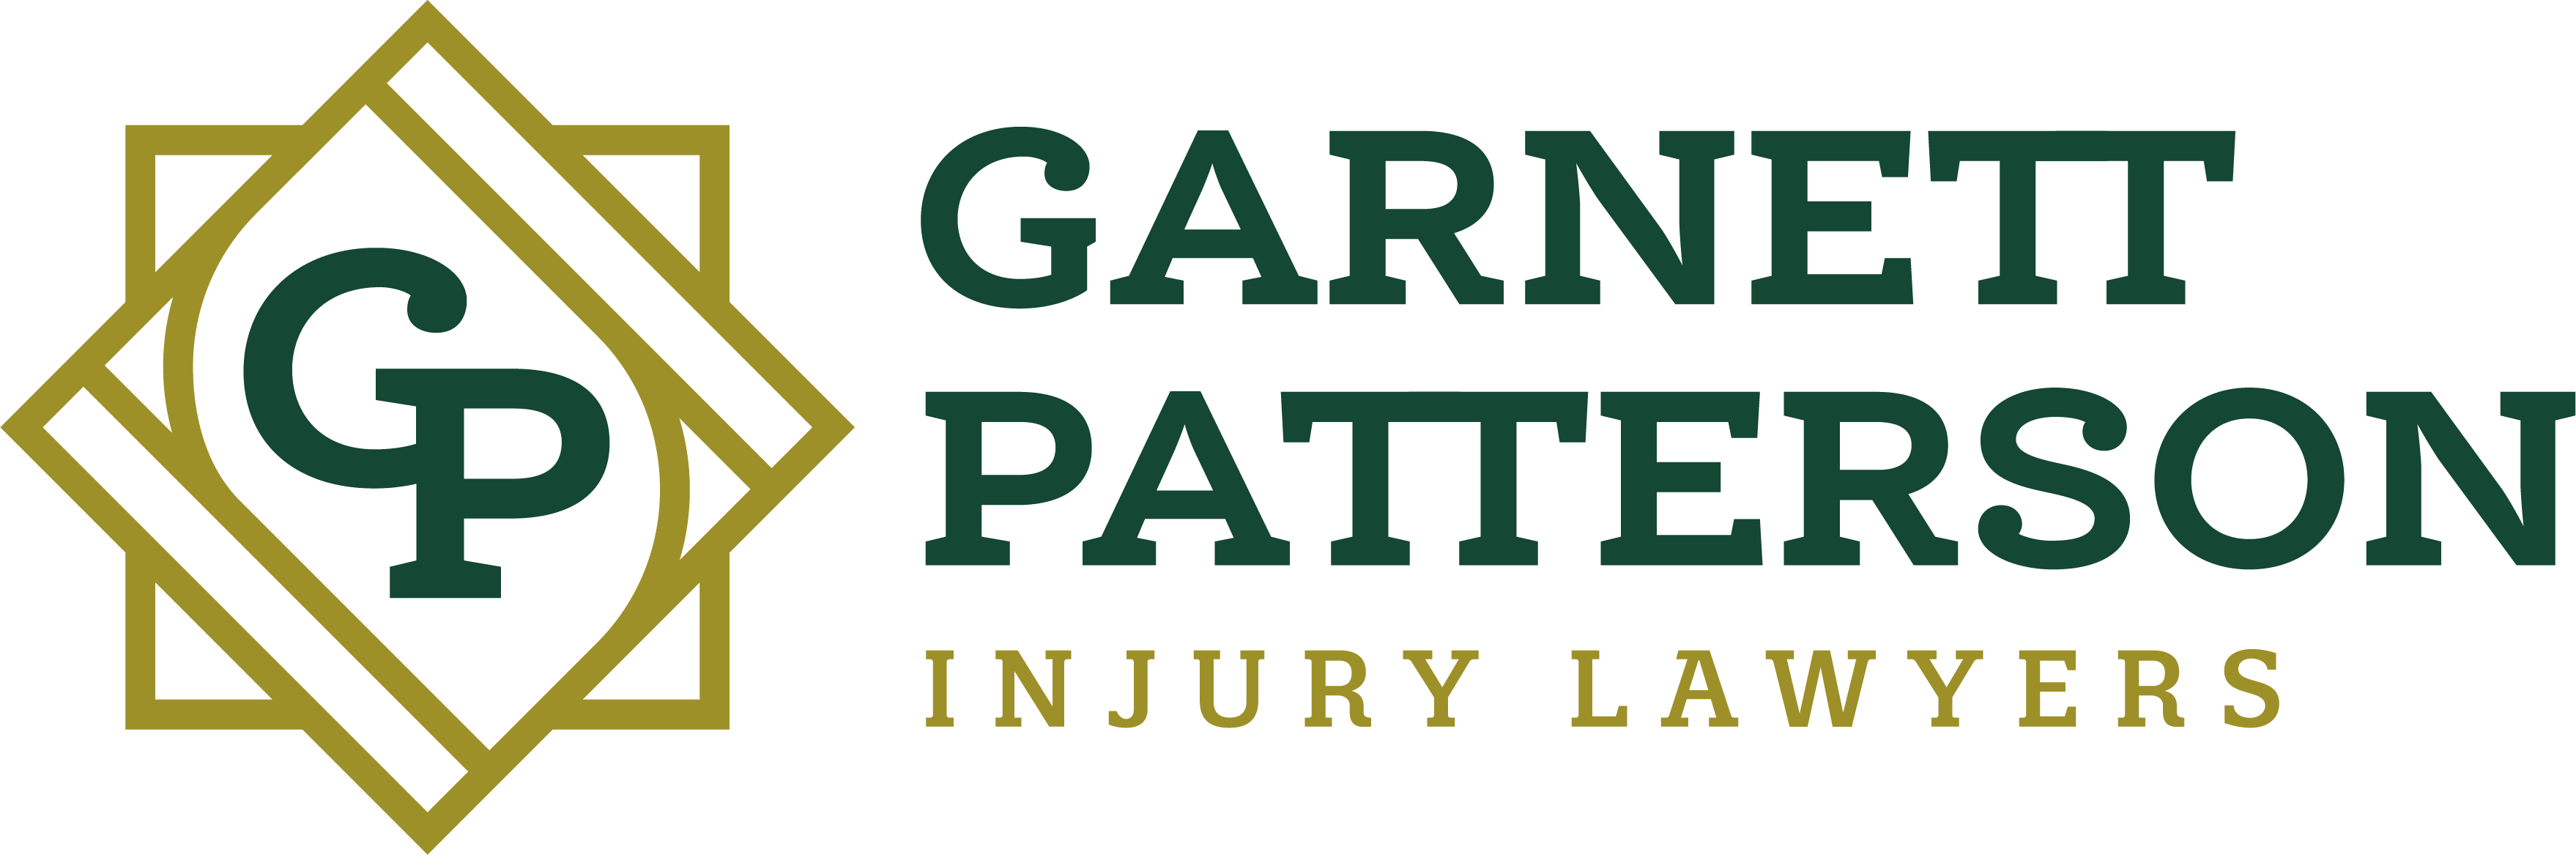 Garnett-Patterson-Injury-Lawyers-Huntsville-Logo.png